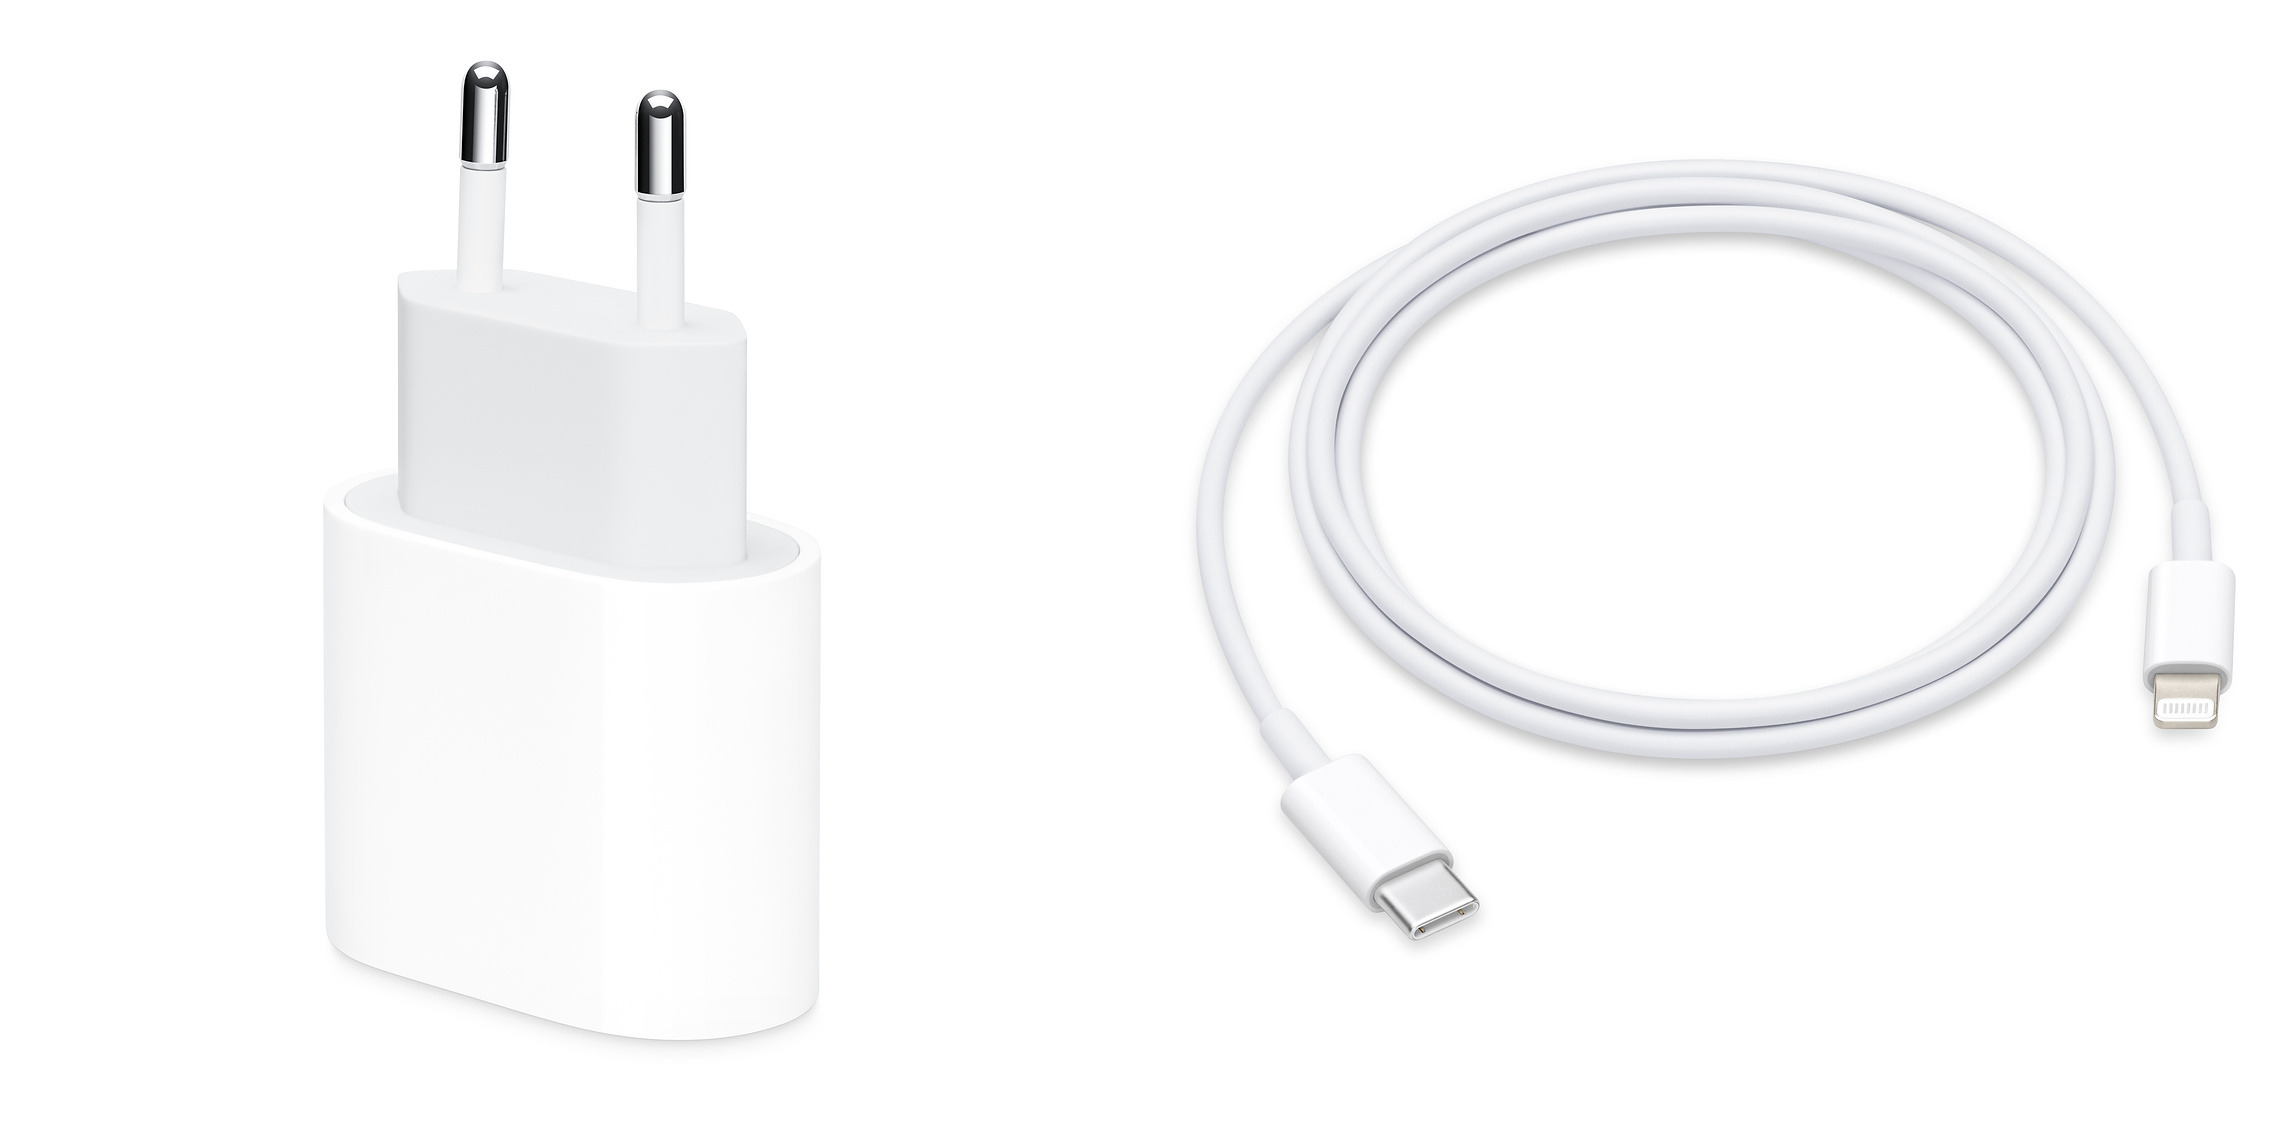 Зарядное устройство для айфона 15 про. Apple Adapter 20w USB-C. Зарядка iphone 18w. Apple 20w USB Power Adapter. Адаптер сетевой с кабелем [Apple] mhj83zm/a 20w 1usb-c + Type-c-Lightning (White).